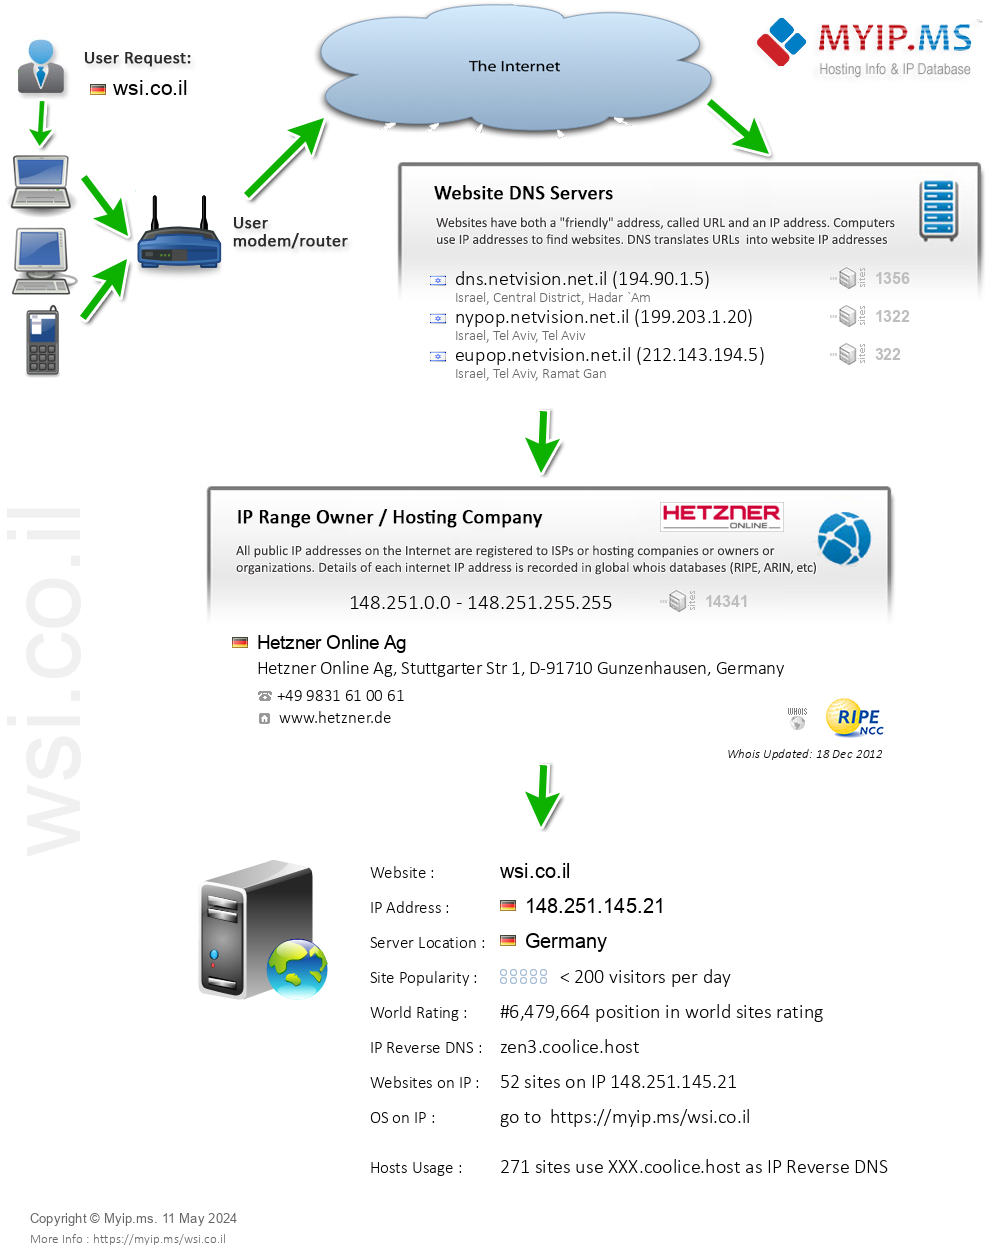 Wsi.co.il - Website Hosting Visual IP Diagram